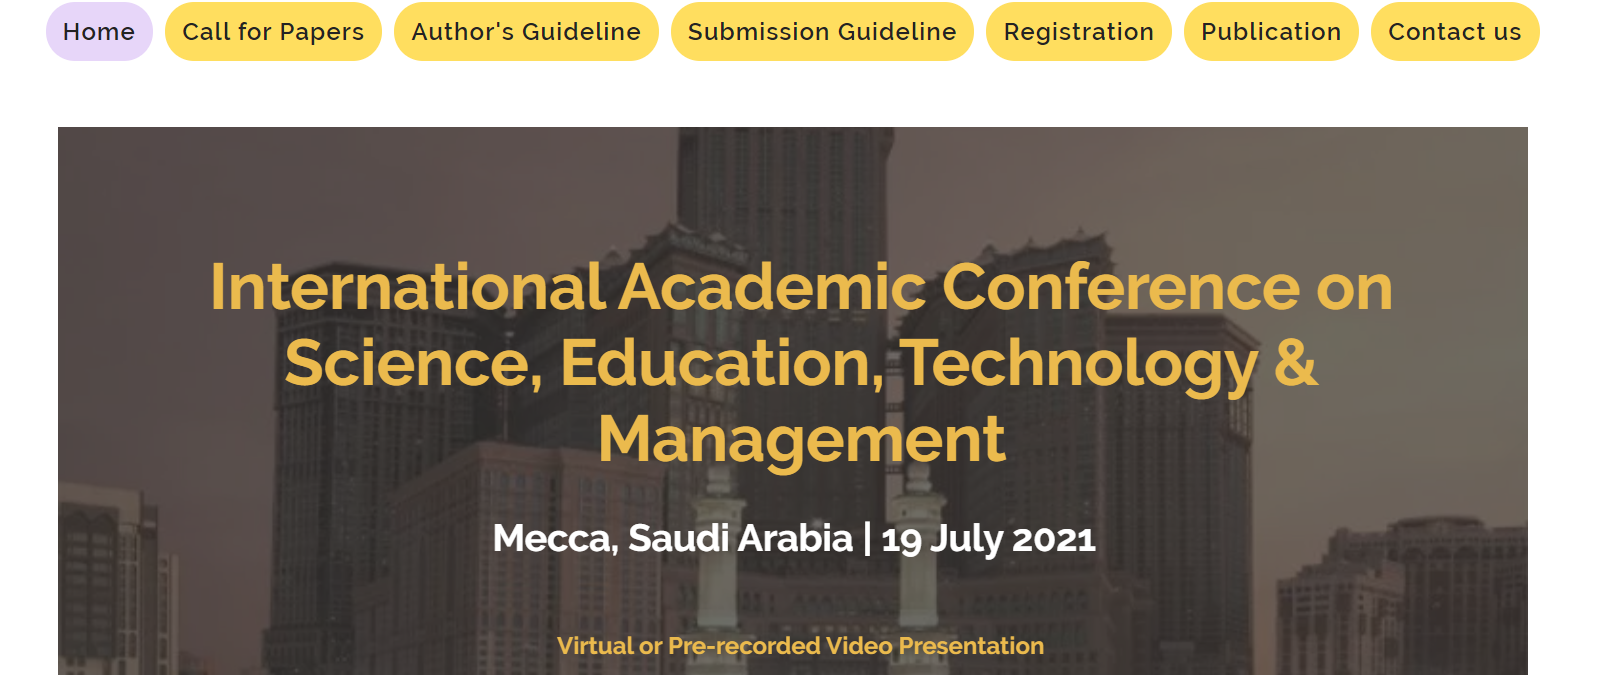 International Academic Conference on Science, Education, Technology & Management, Mecca, Saudi Arabia, Saudi Arabia